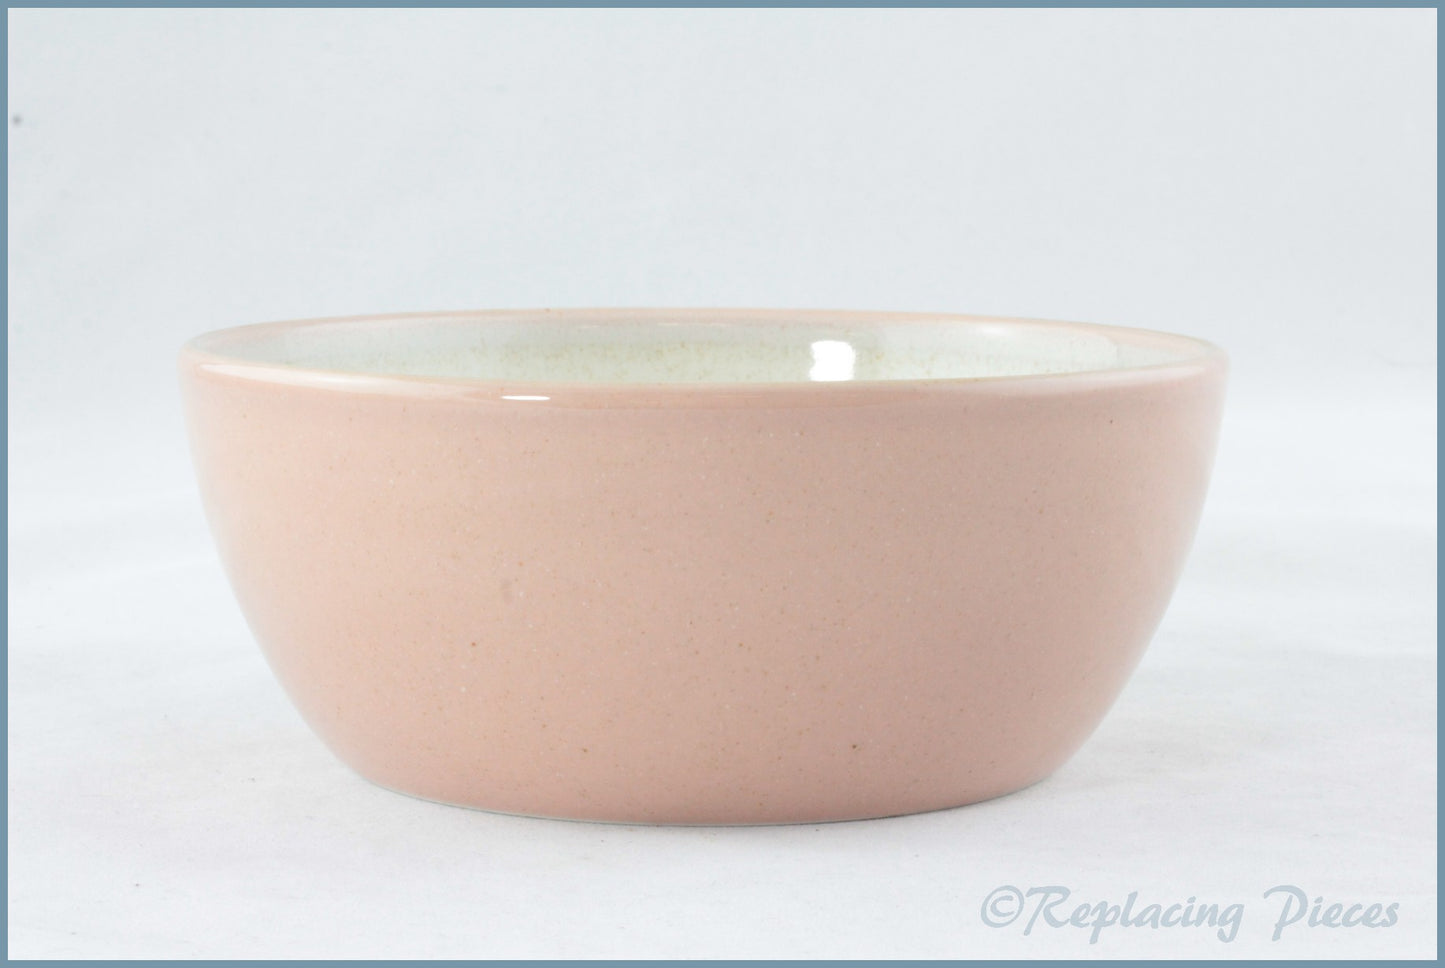 Marks & Spencer - Amberley (Pink) - Cereal Bowl